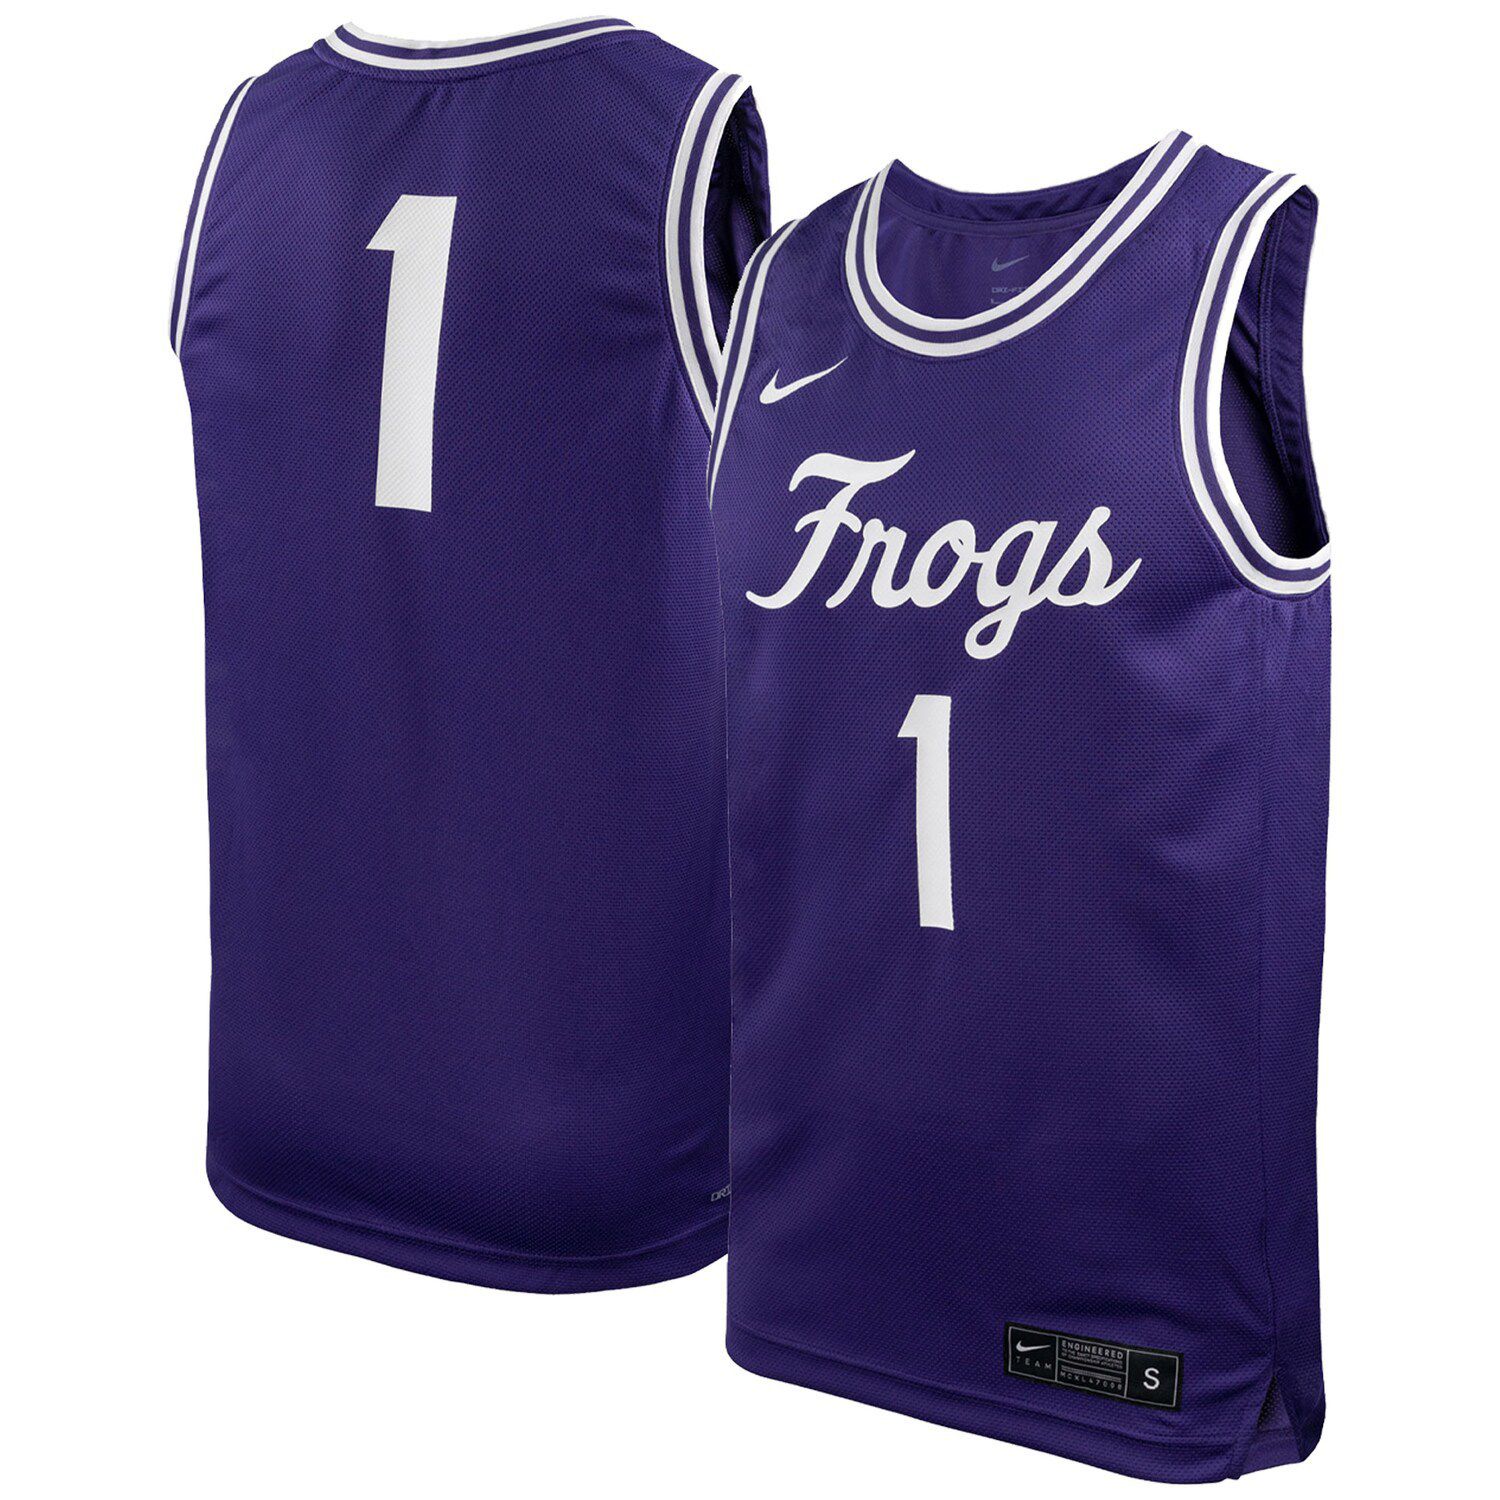 Men's Nike #22 Purple Kansas State Wildcats Replica Basketball Jersey